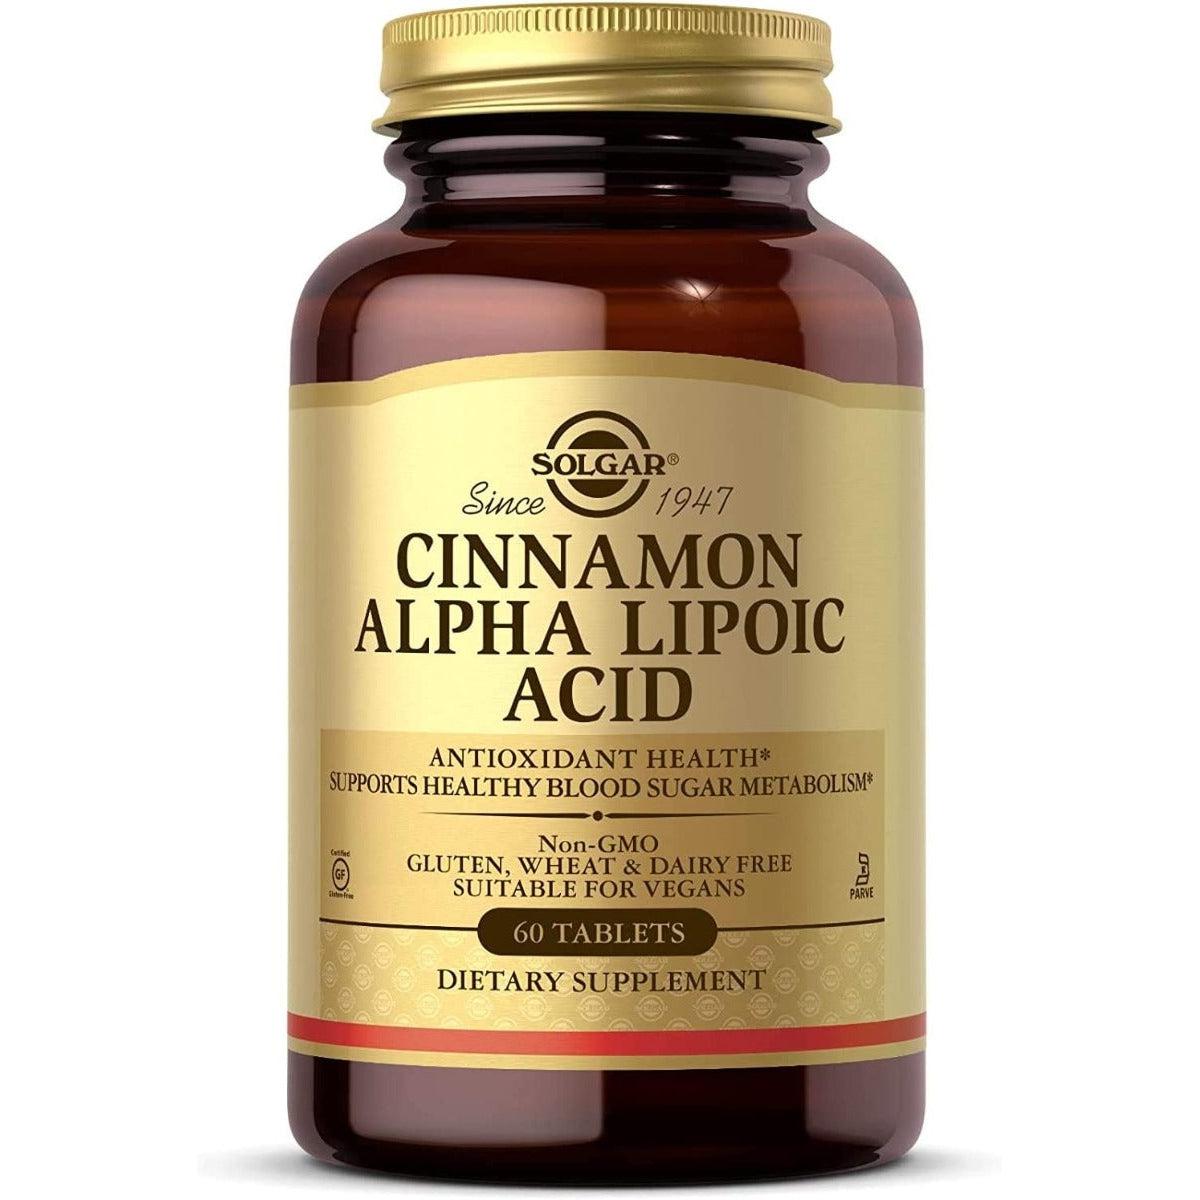 Solgar Cinnamon Alpha Lipoic Acid Antioxidant Health Non-GMO Gluten Free Dairy Free Vegan 60 Tablets